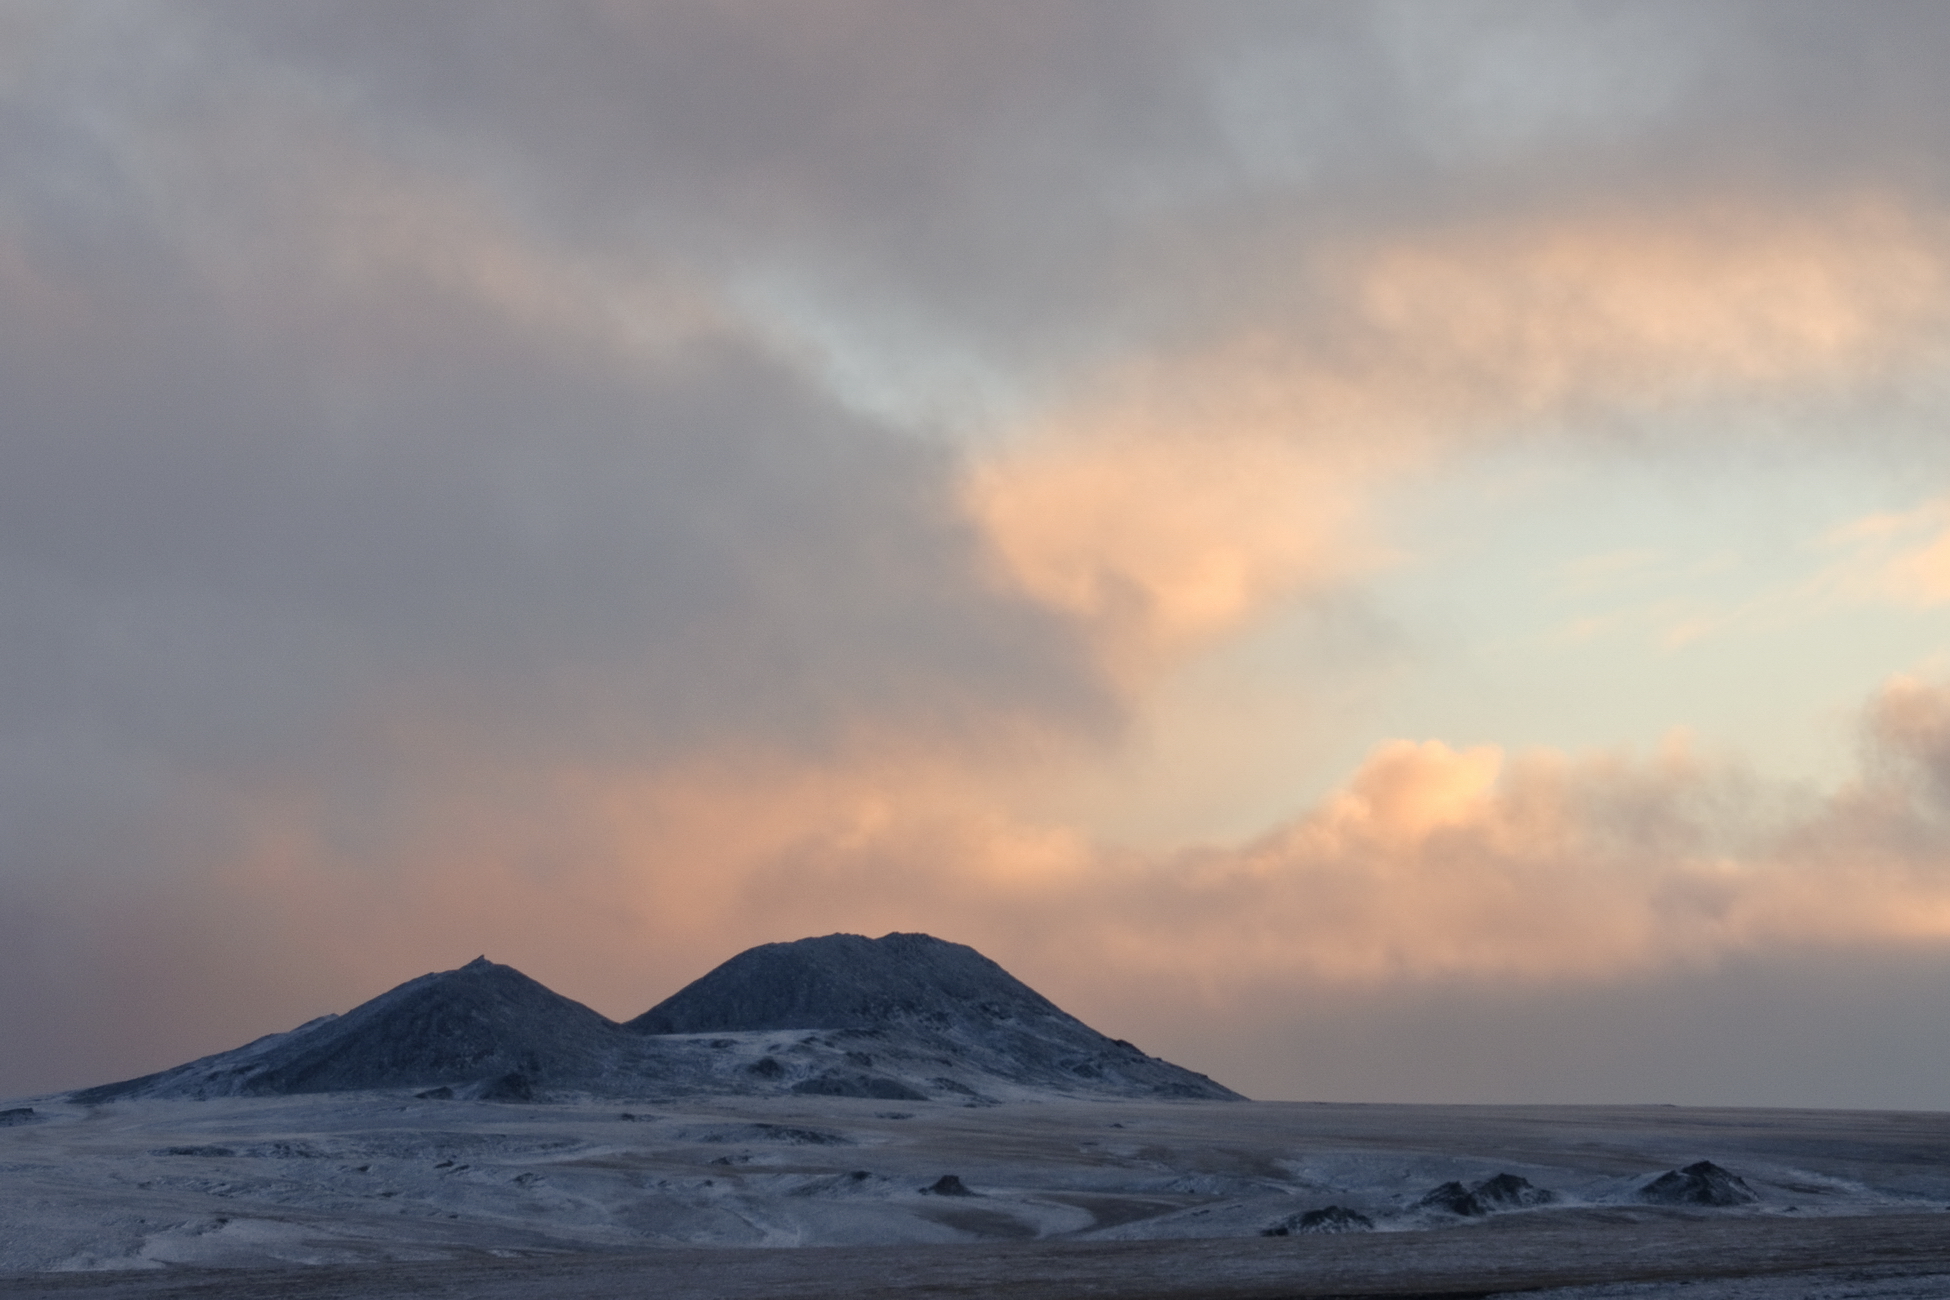 Арктика сегодня. Началась научная экспедиция на архипелаг Северная Земля